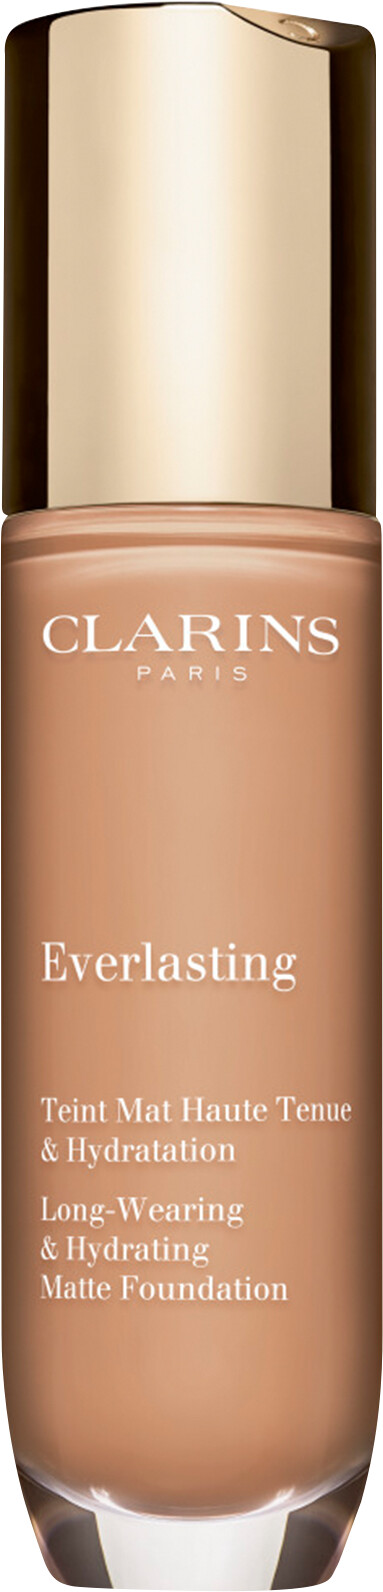 Clarins Everlasting Long-Wearing & Hydrating Matte Foundation 30ml 112C - Amber